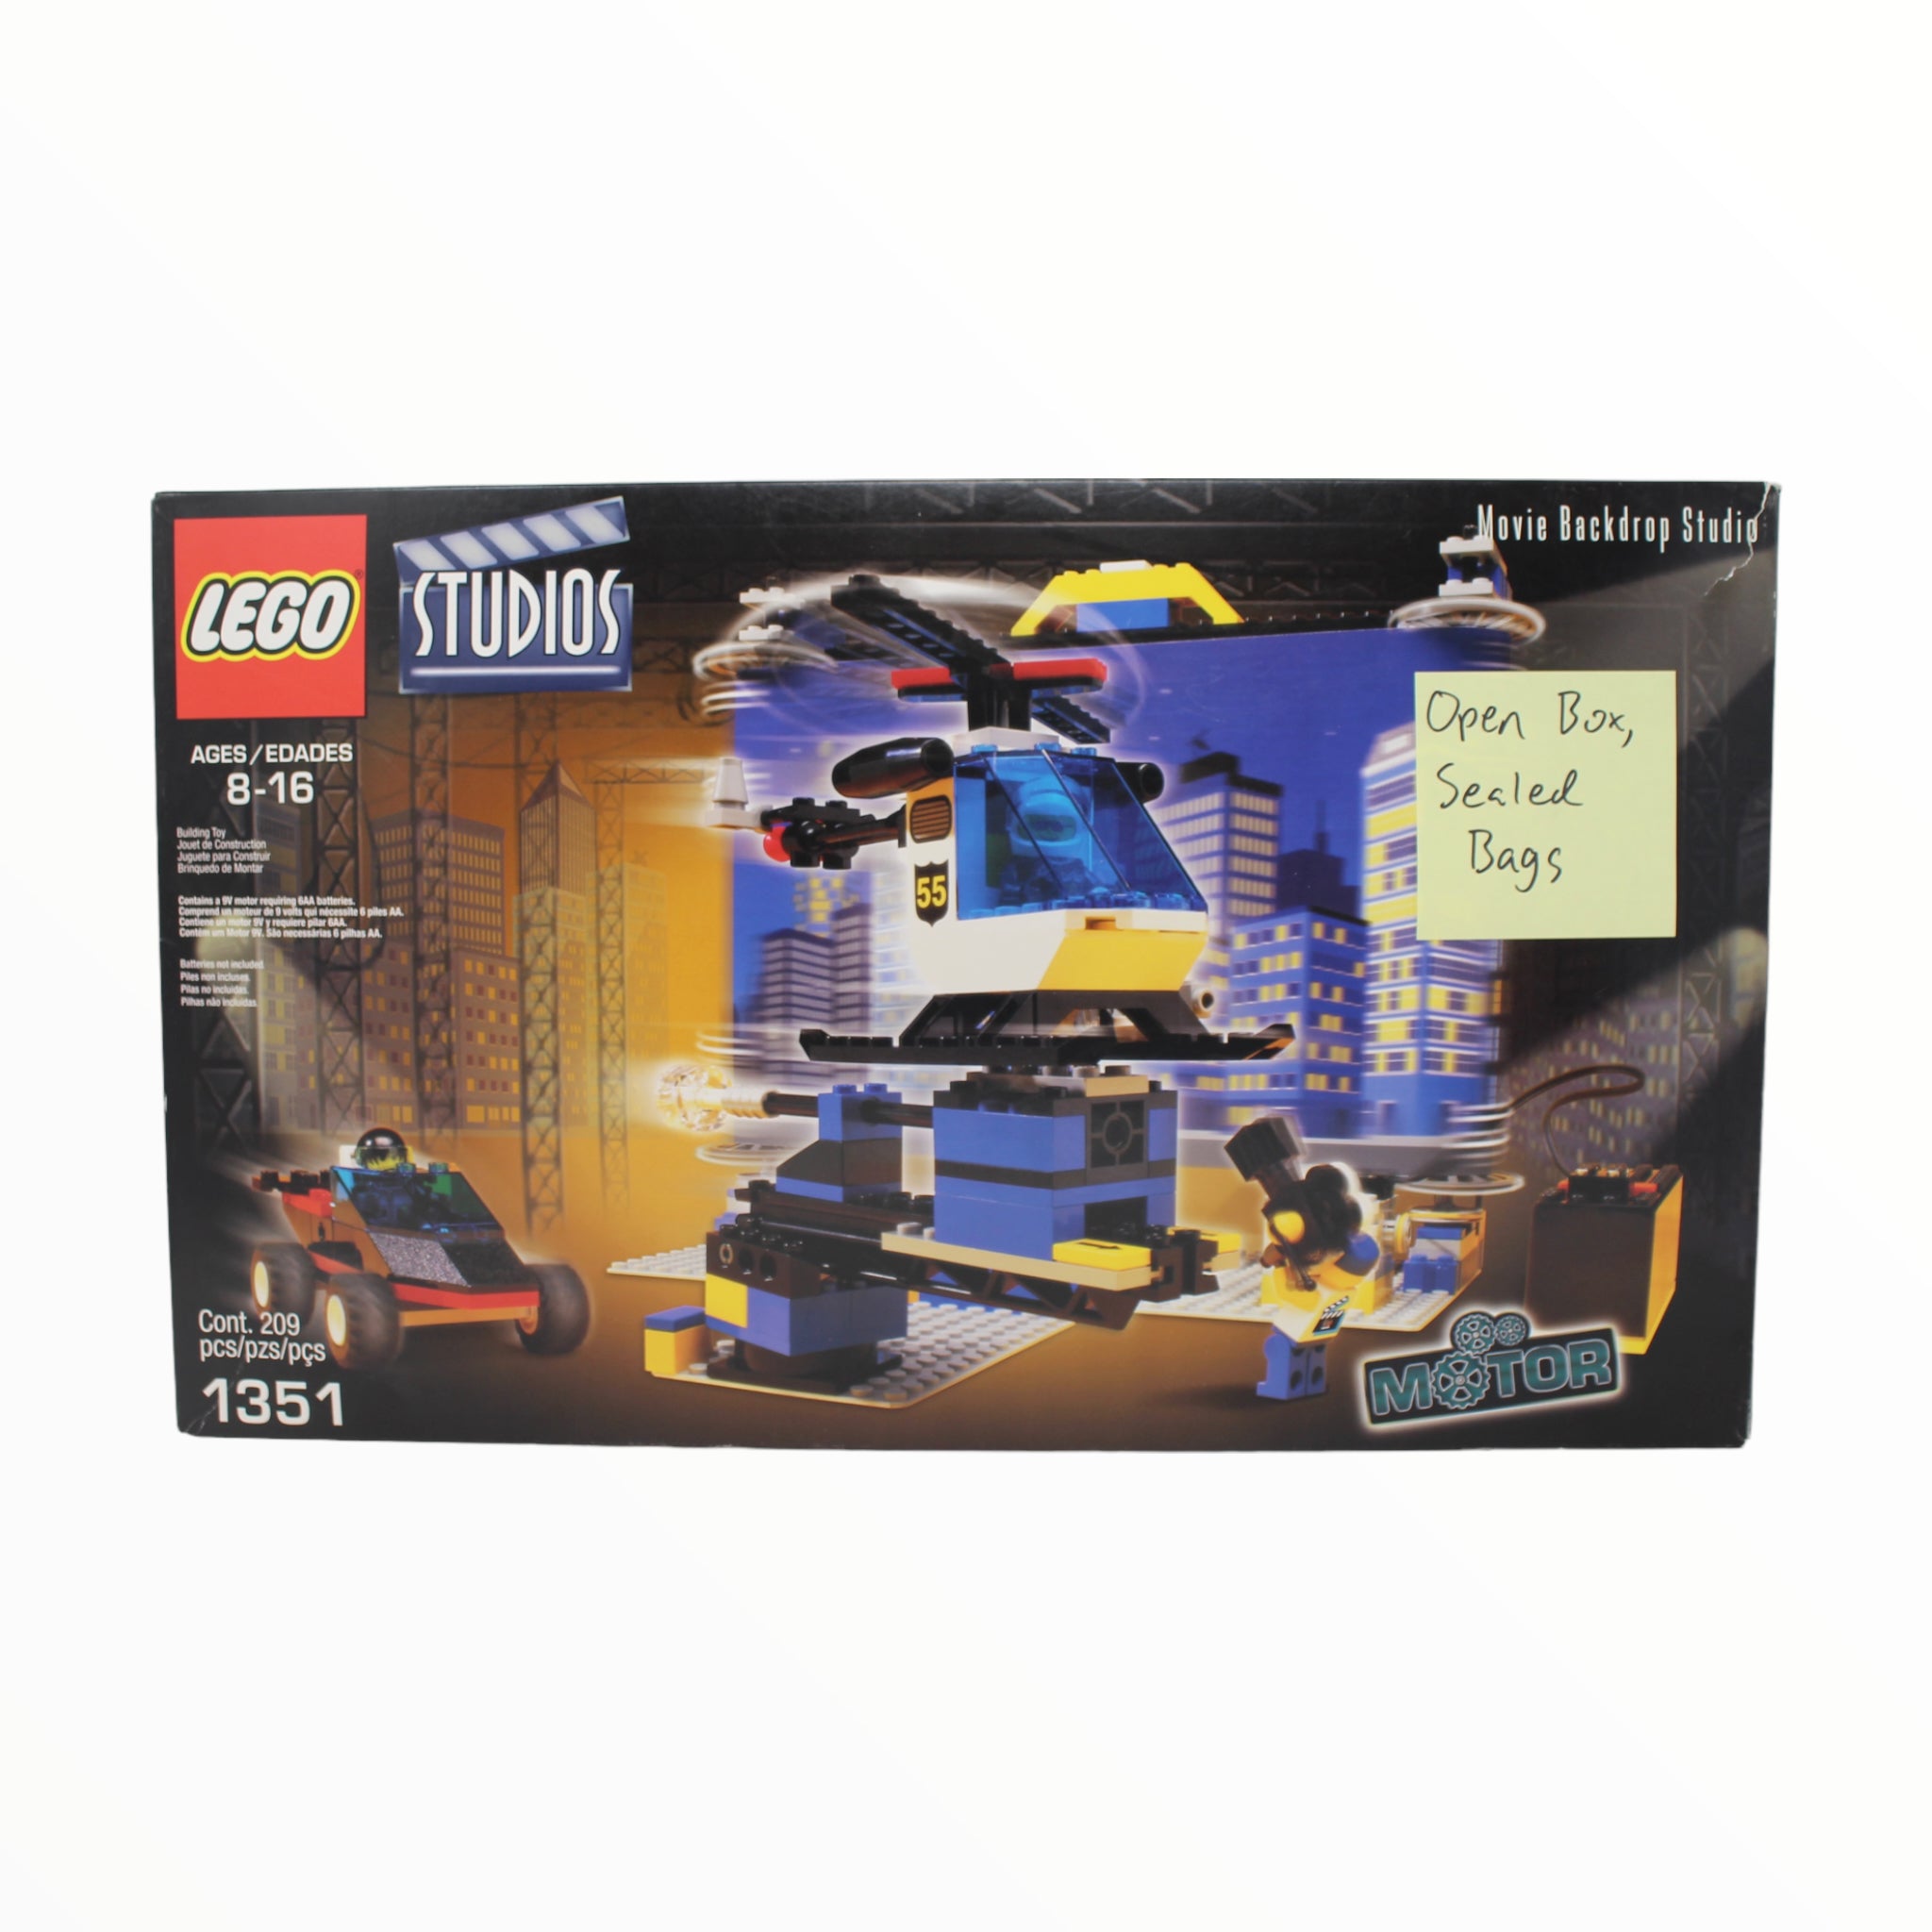 Certified Used Set 1351 LEGO Studios Movie Backdrop Studio (open box, sealed bags)